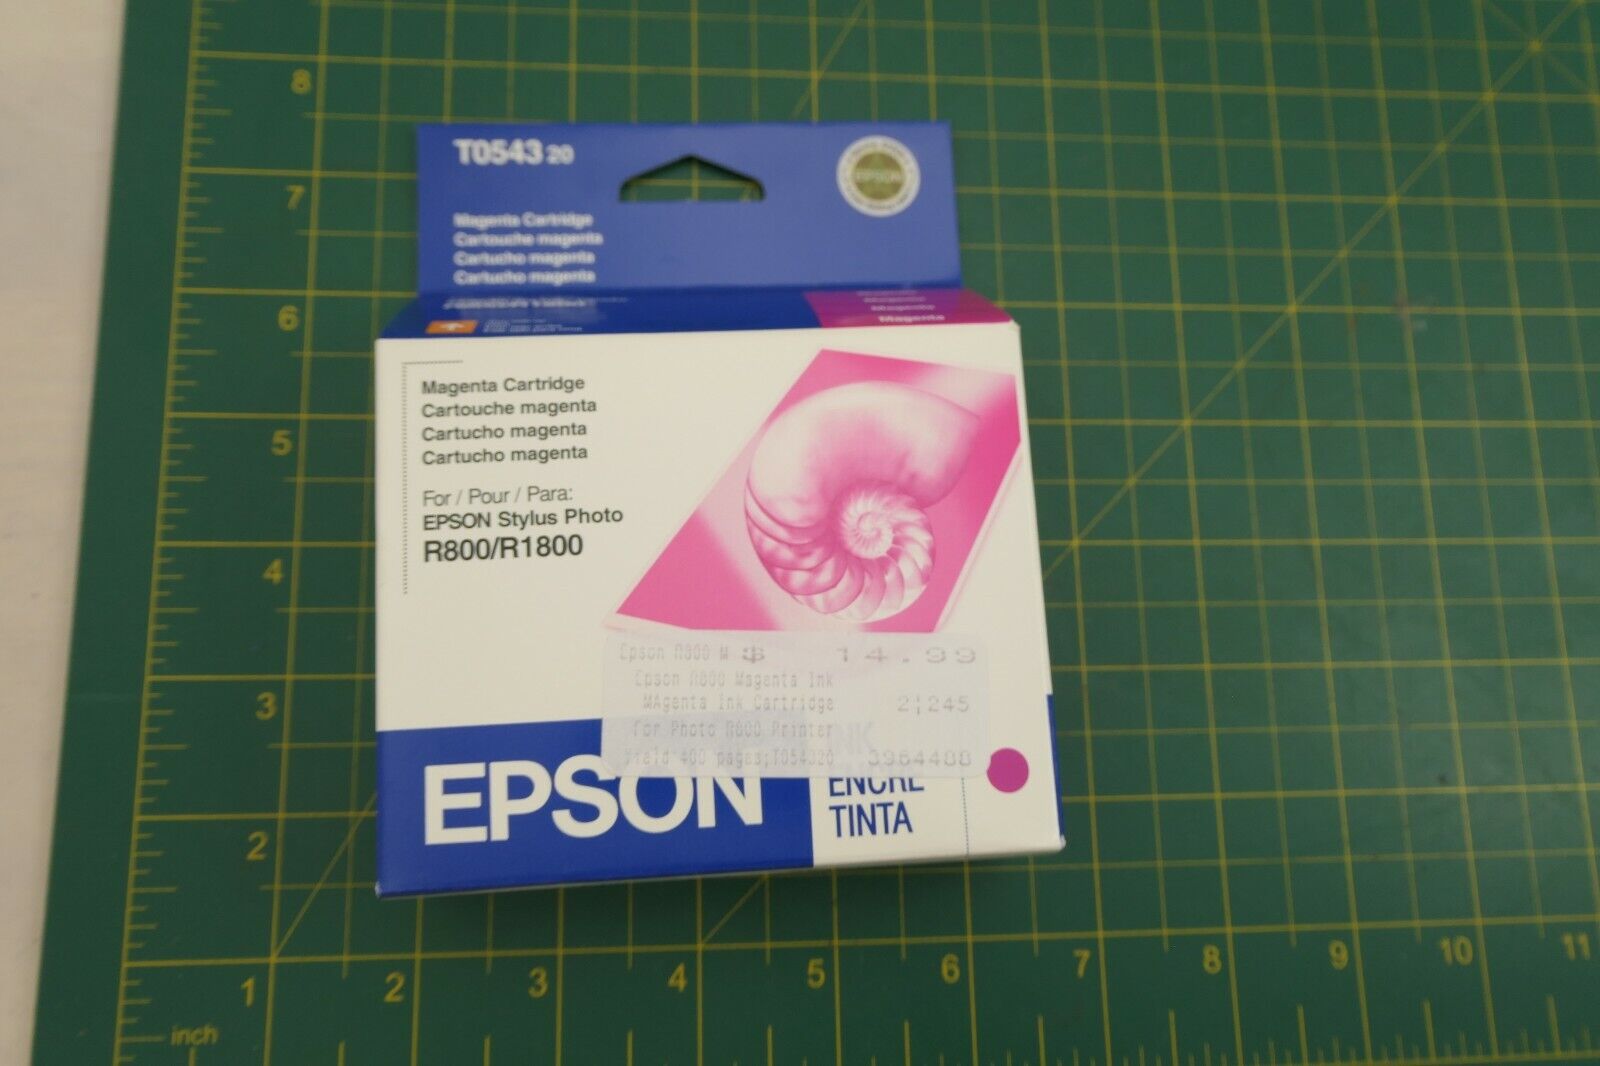 Genuine Epson T054320 Magenta Cartridge - Expire 01/2007